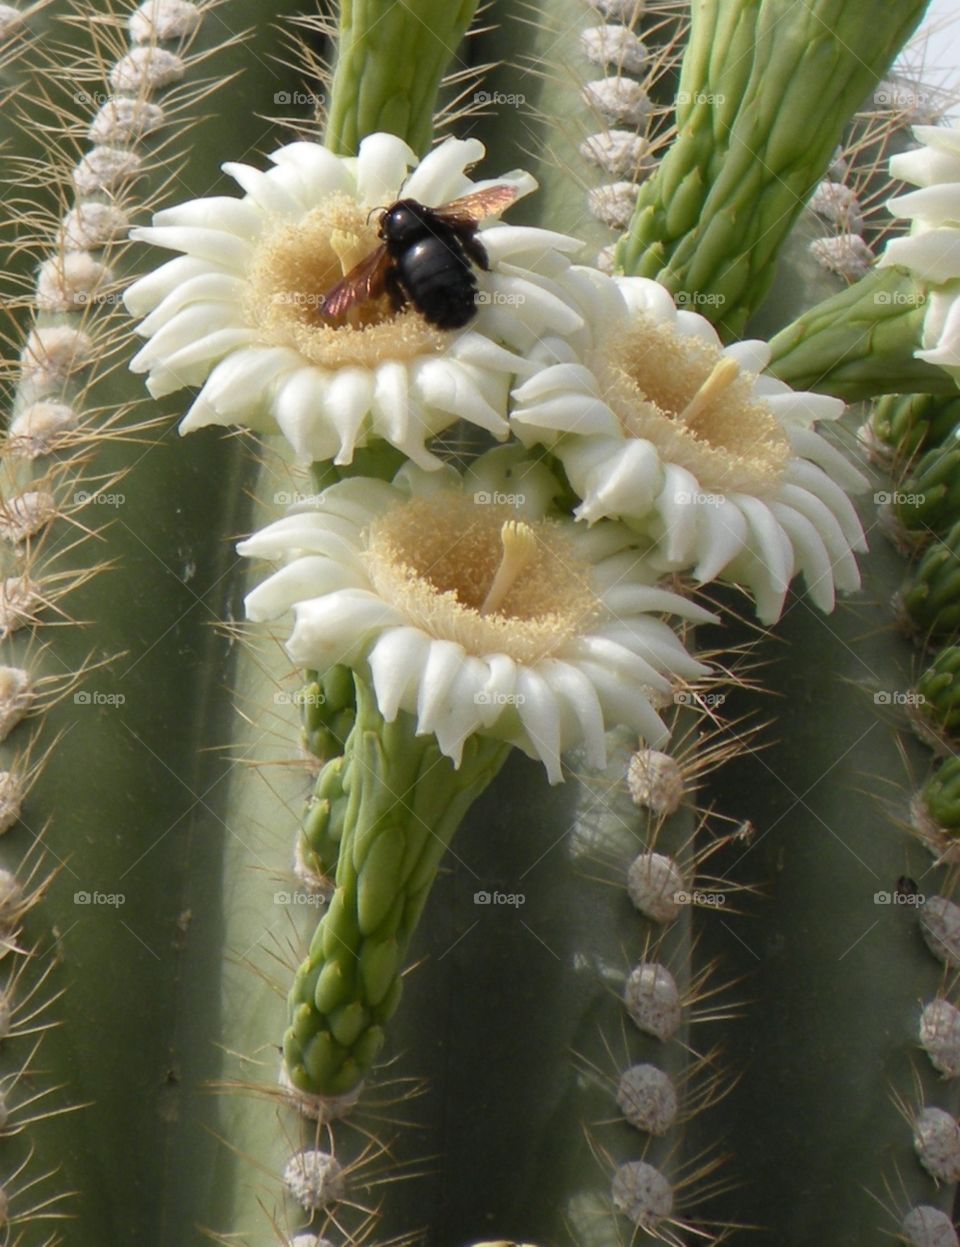 A wood bee on a saguaro cactus flower in Scottsdale, Arizona.